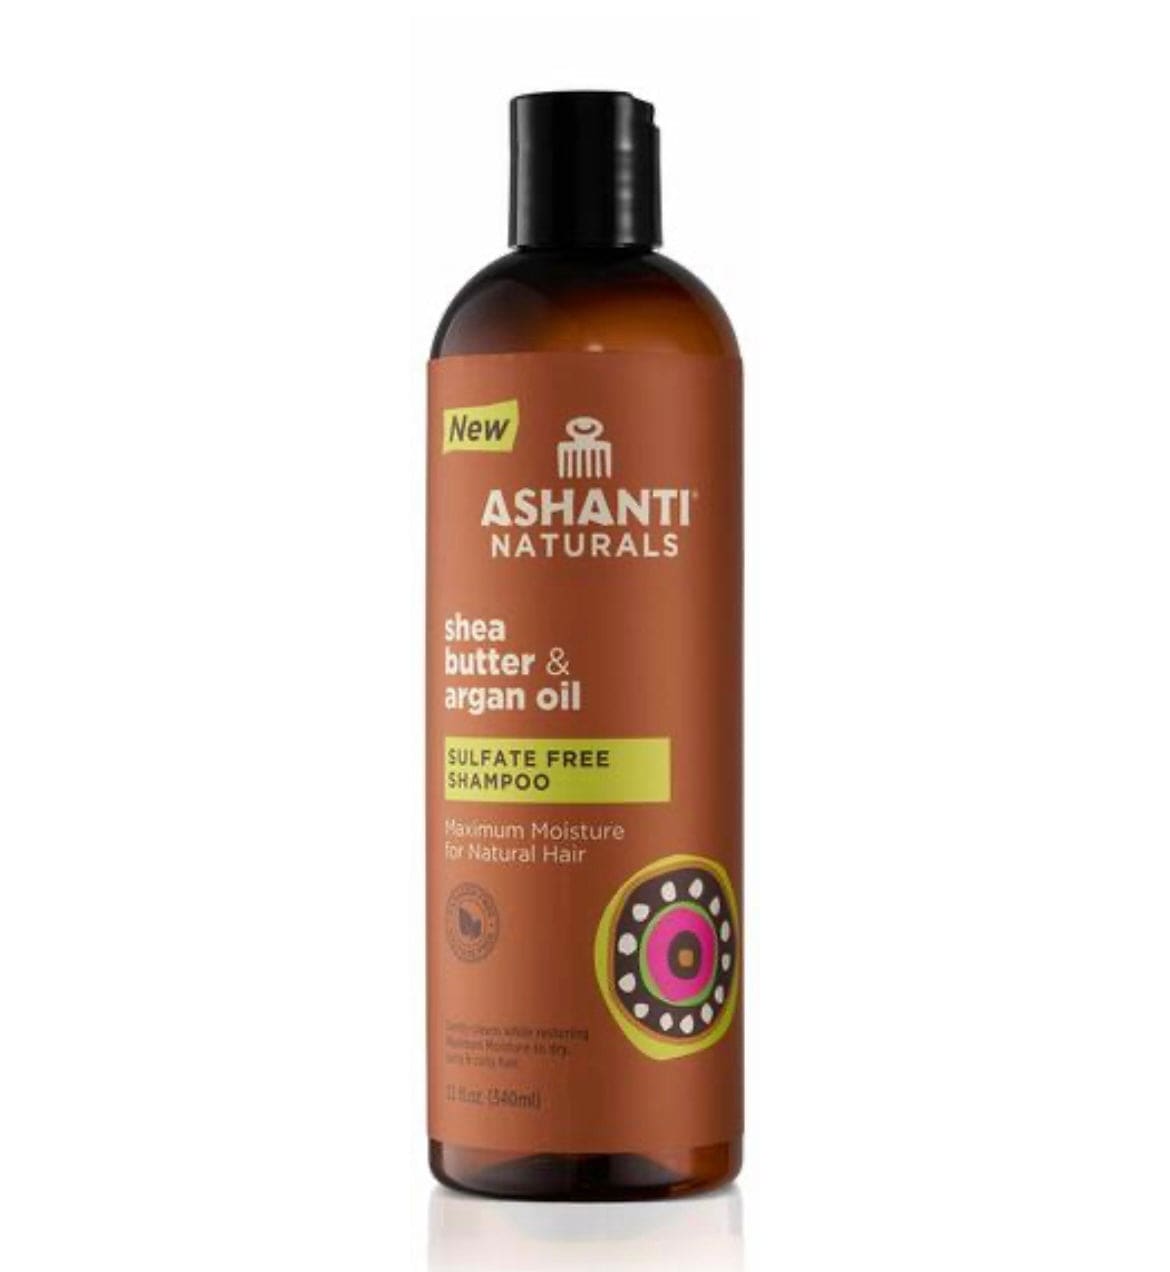 Ashanti Natural Sulfate Free Shampoo Shea Butter & Argan Oil 11 oz Organic Shampoo